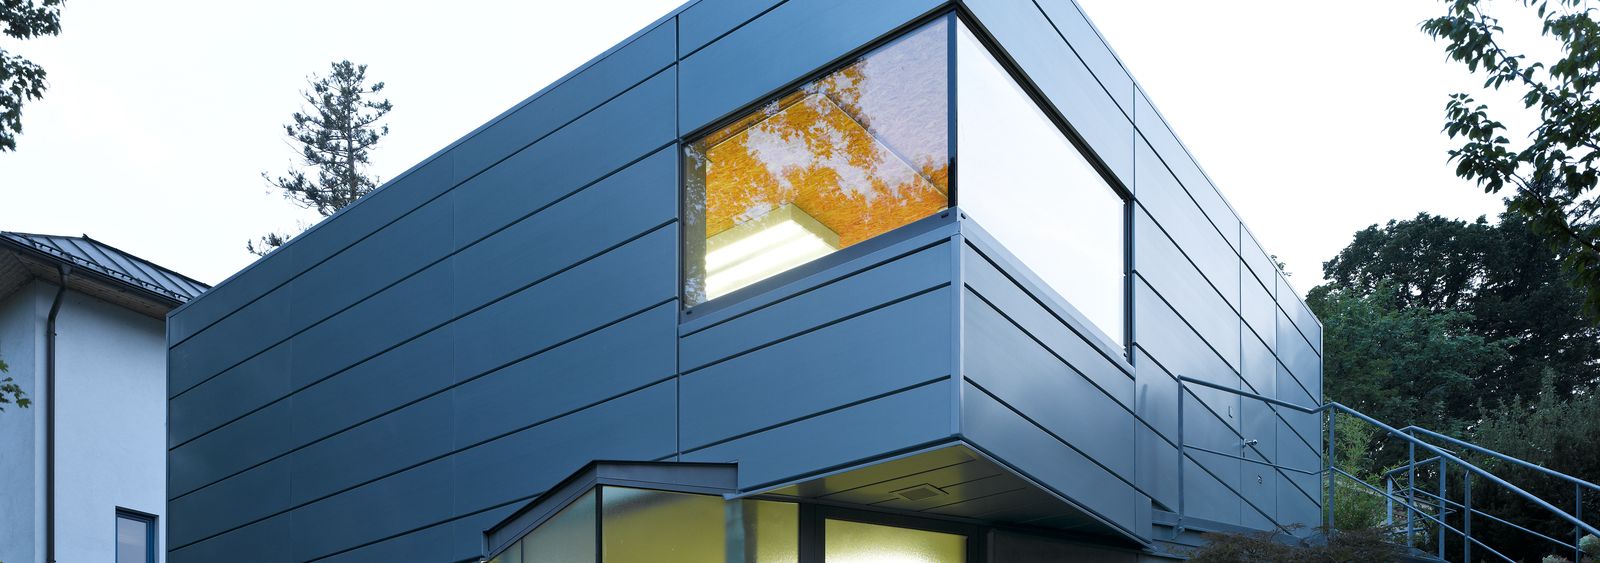 Wohnhaus Fassadensystem perPATINA blaugrau RHEINZINK